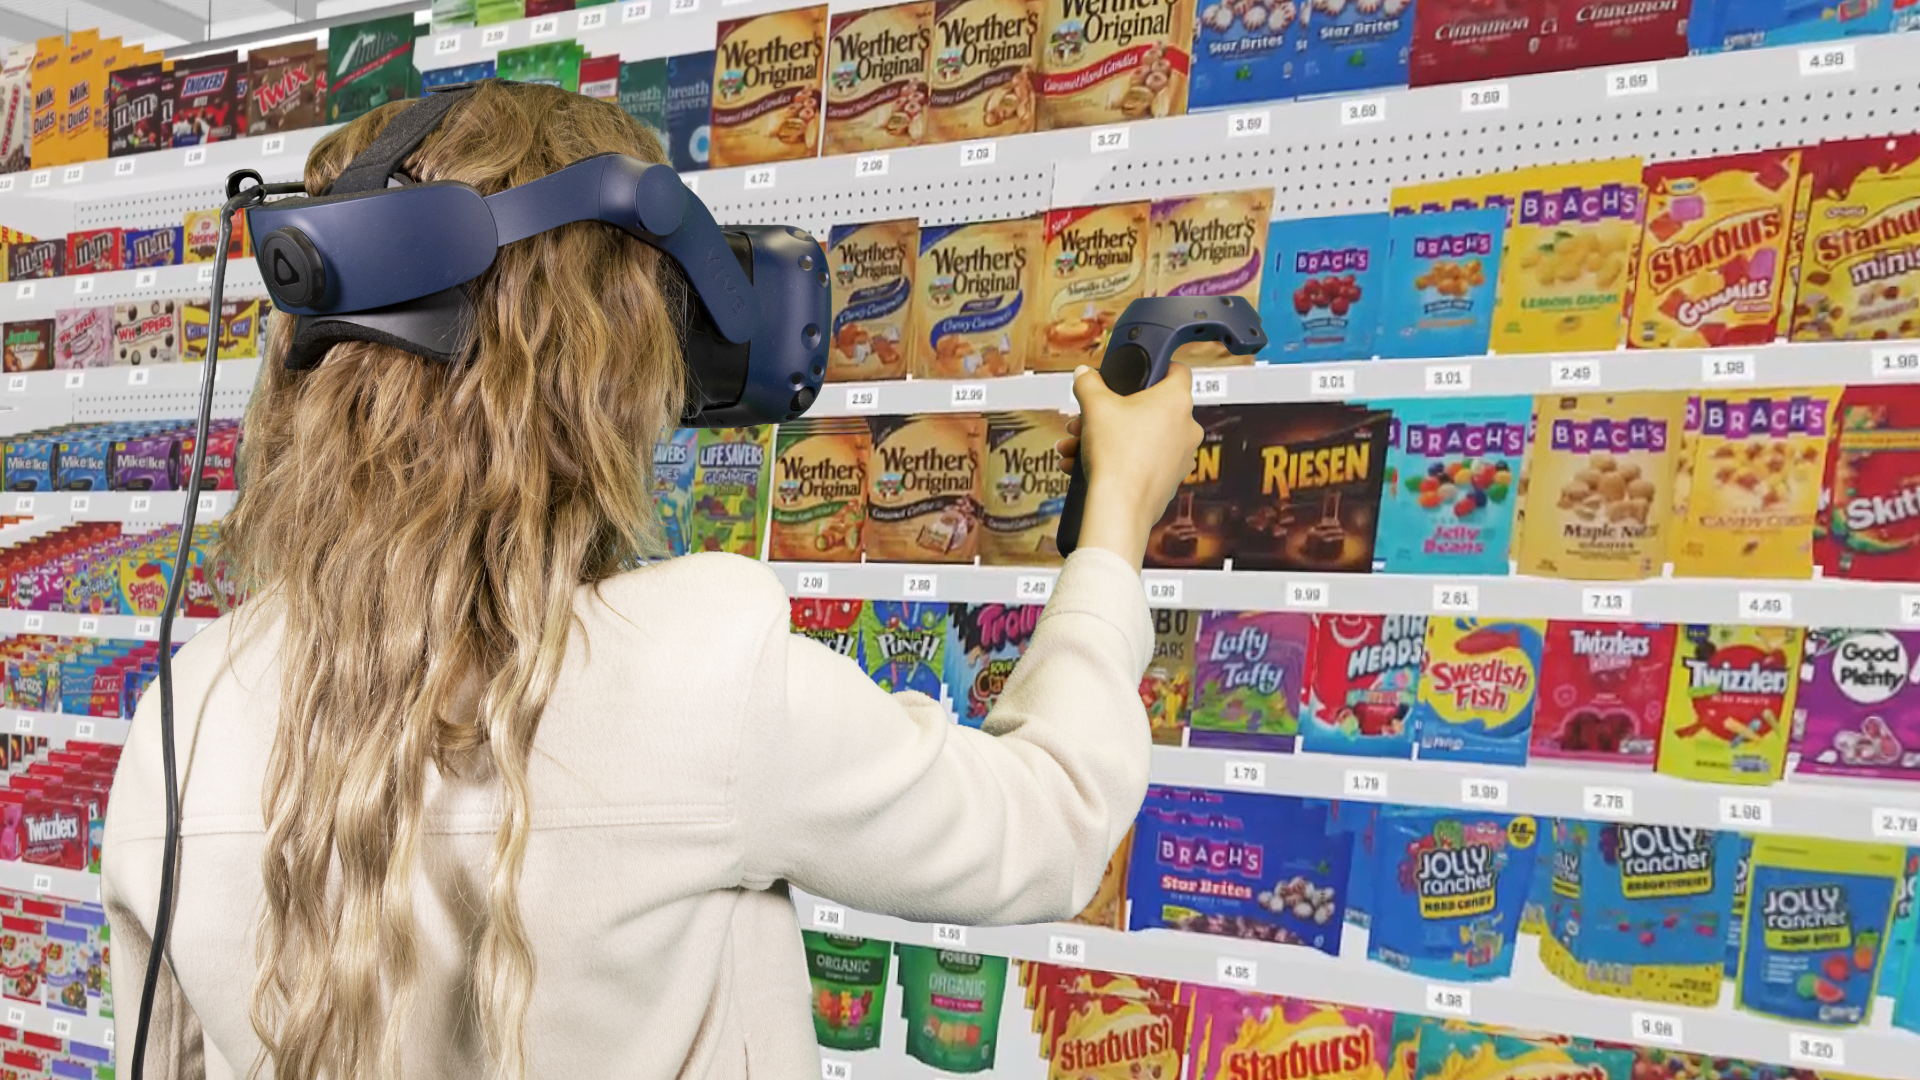 ReadySet Virtual Reality Market Research Shopping Study